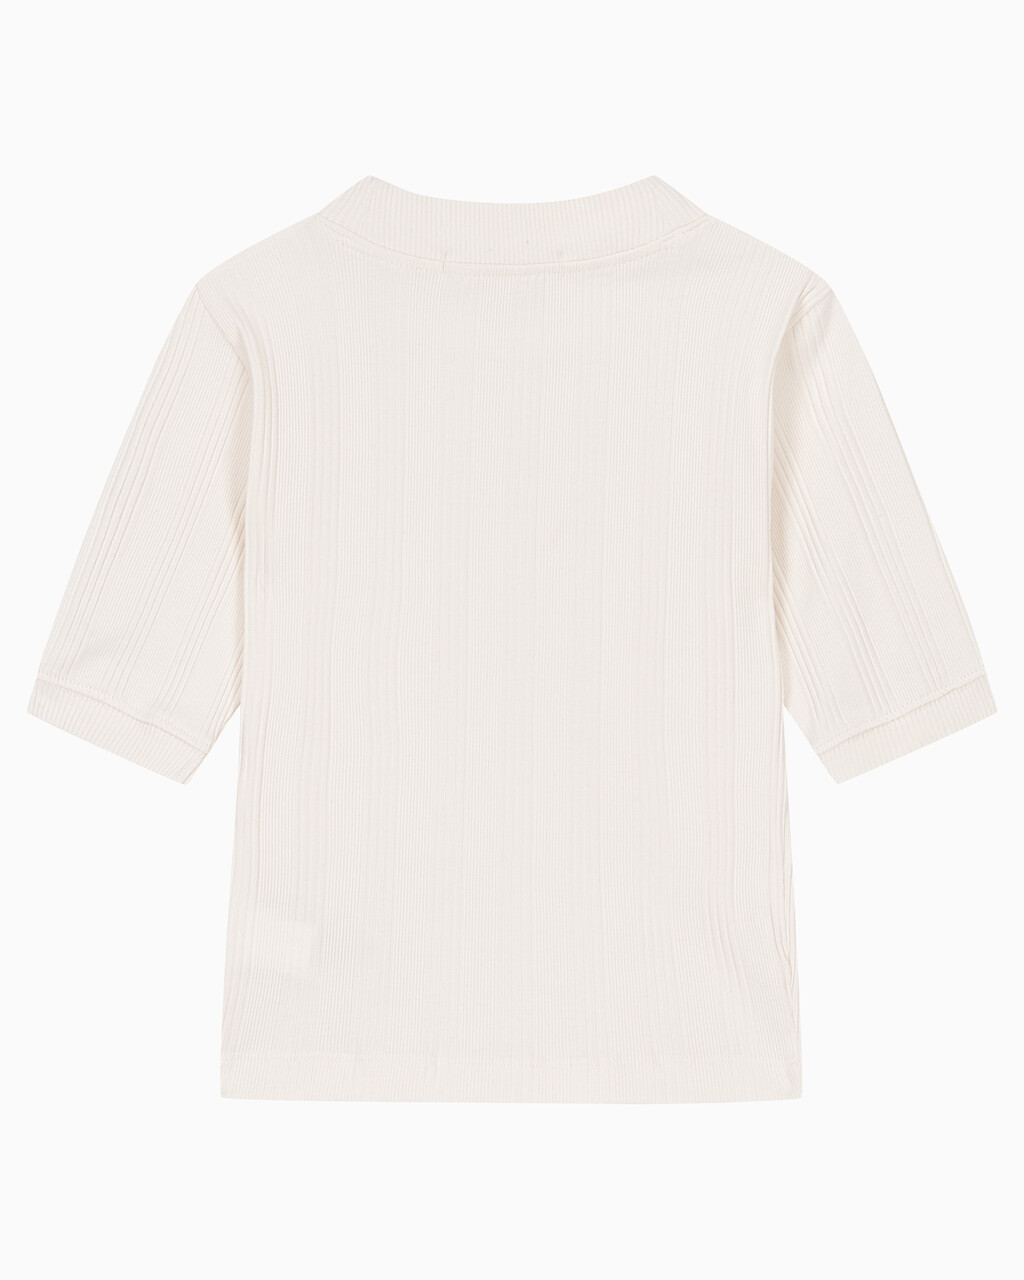 Buy 여성 모노그램 로고 뱃지 립 슬림핏 반팔 티셔츠 in color WHITE